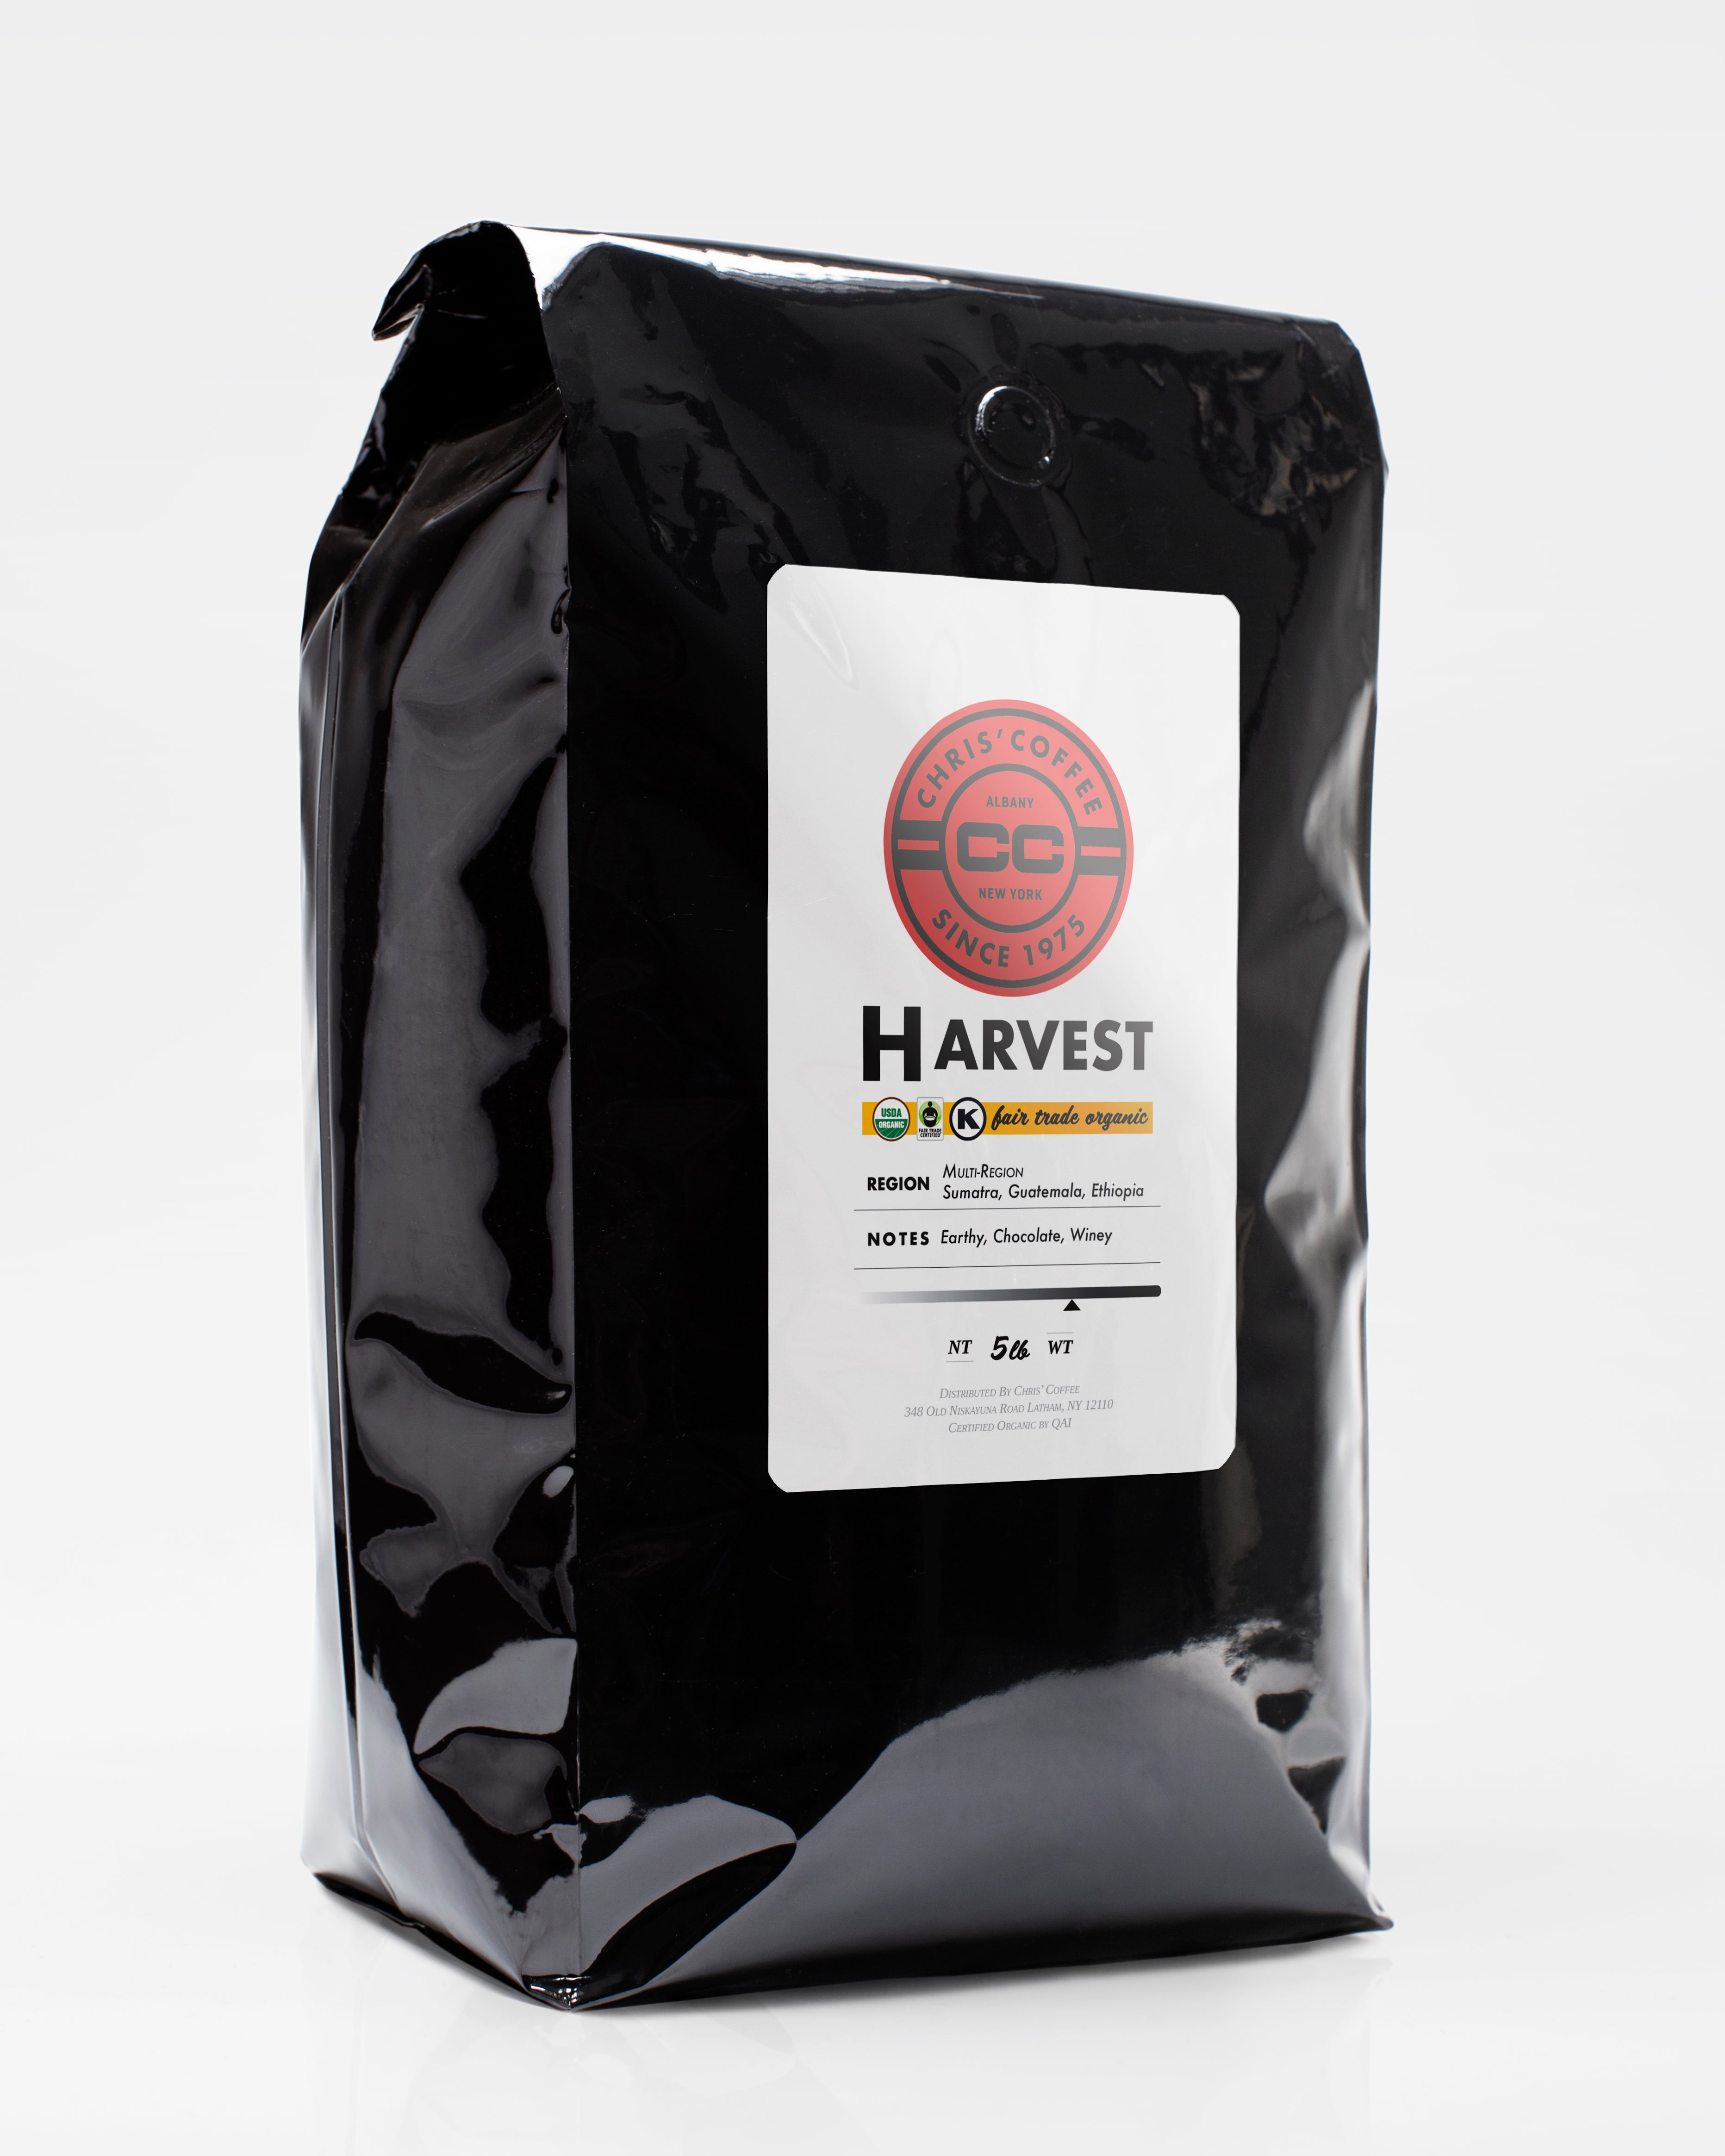 African Harvest Organic Coffee - Homestead Coffee Roasters